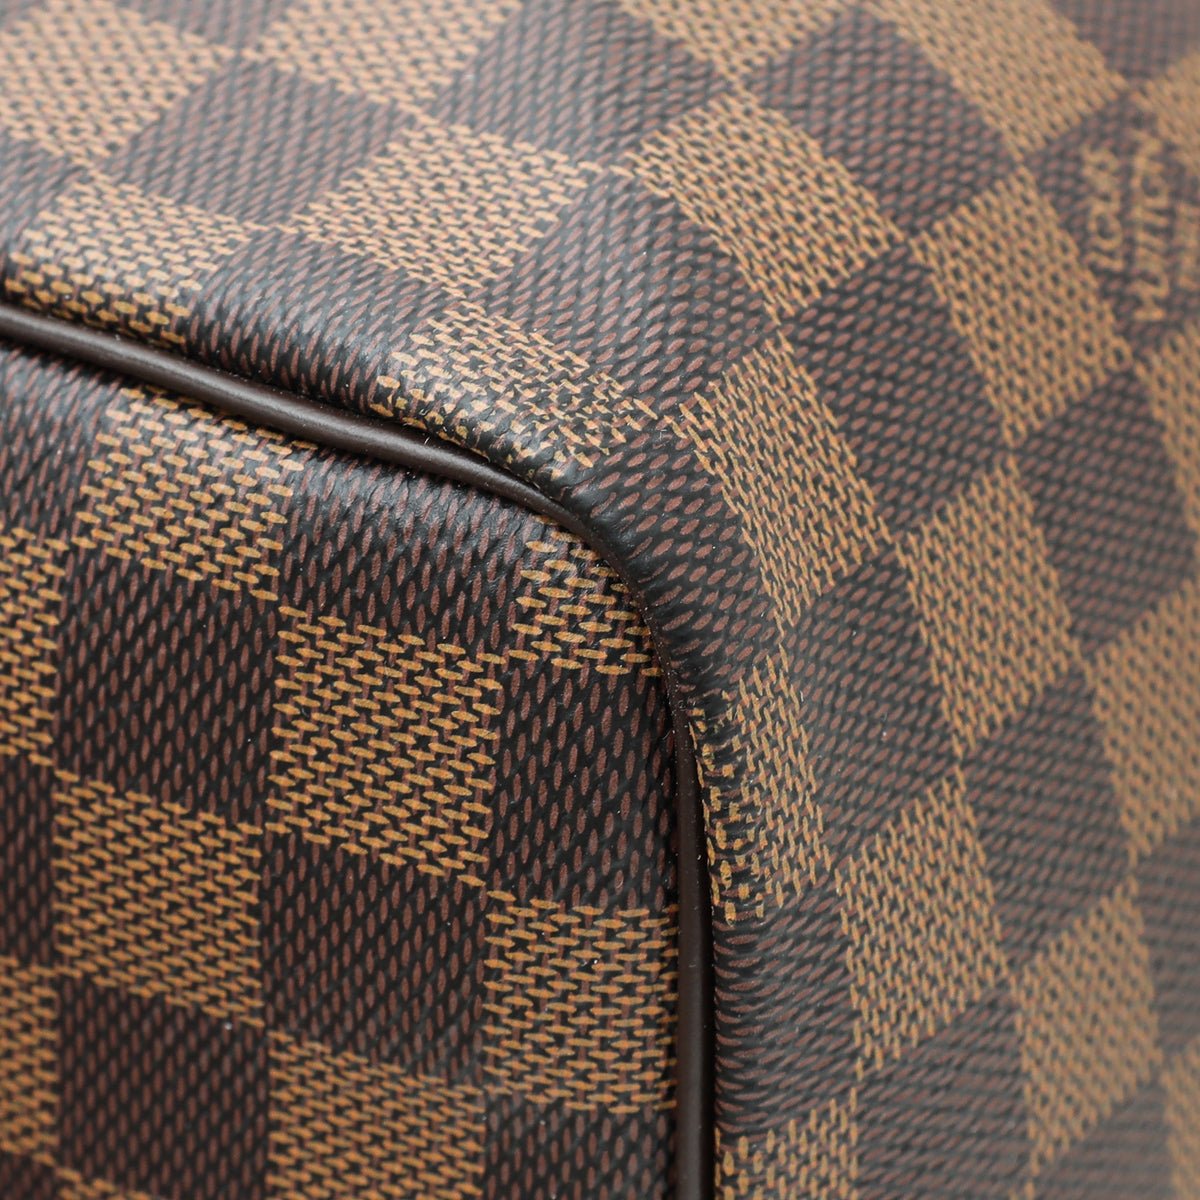 Louis Vuitton Ebene Speedy Bandouliere 30 Bag